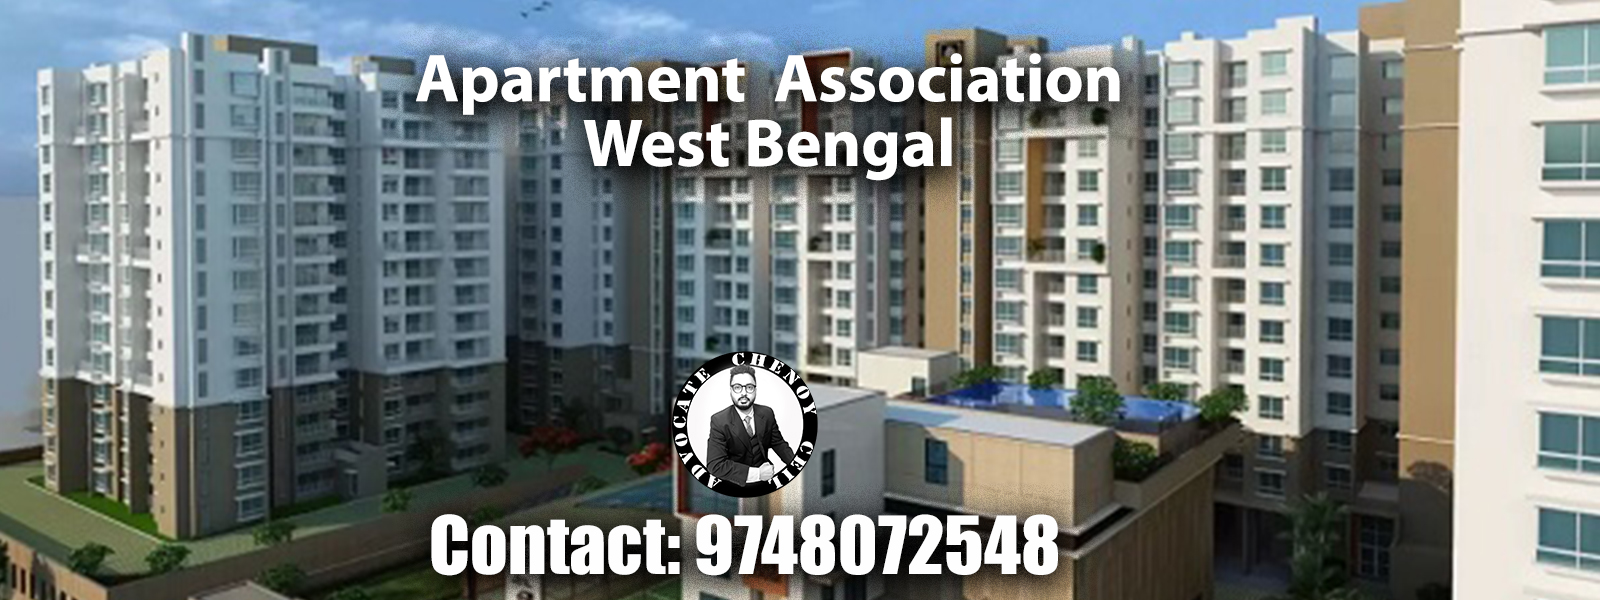 Apartment Association West Bengal